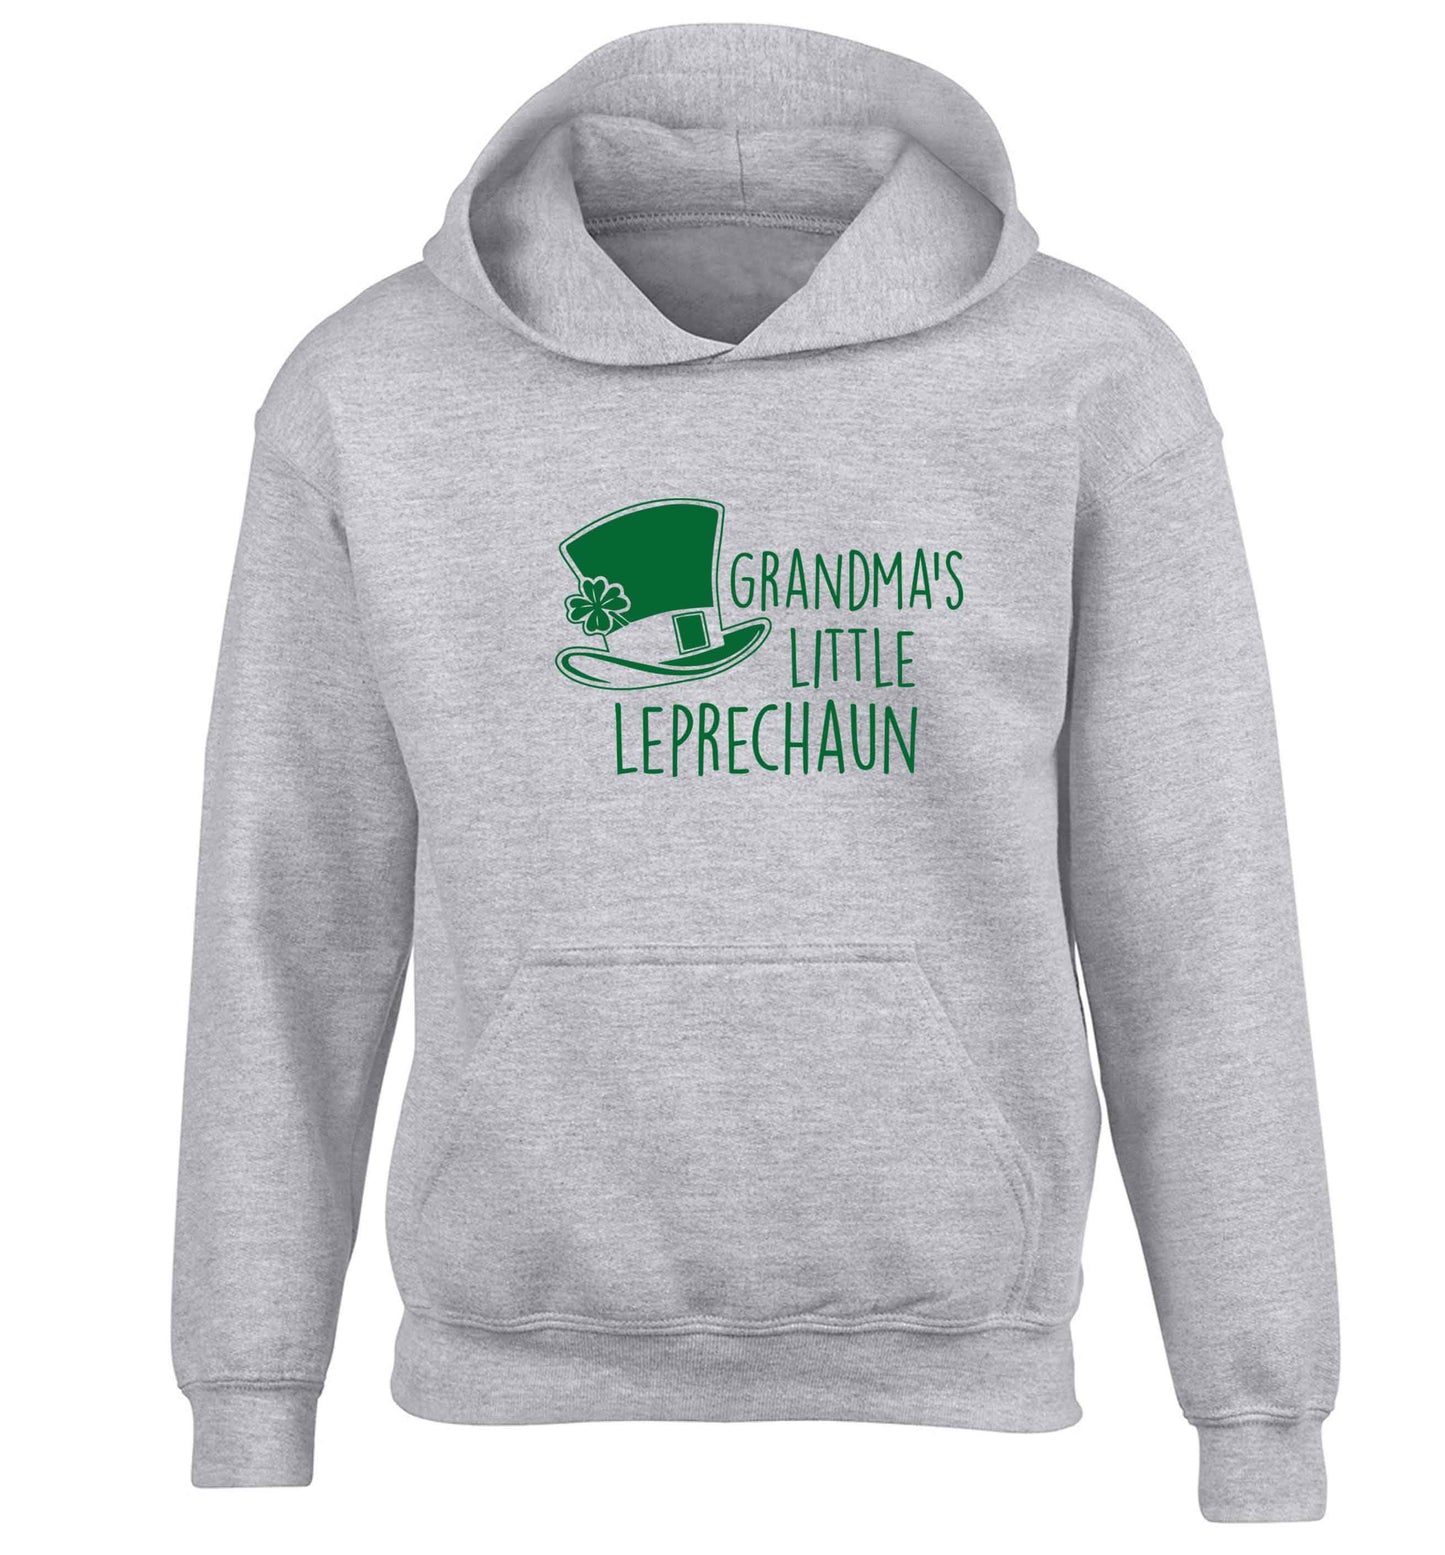 Grandma's little leprechaun children's grey hoodie 12-13 Years